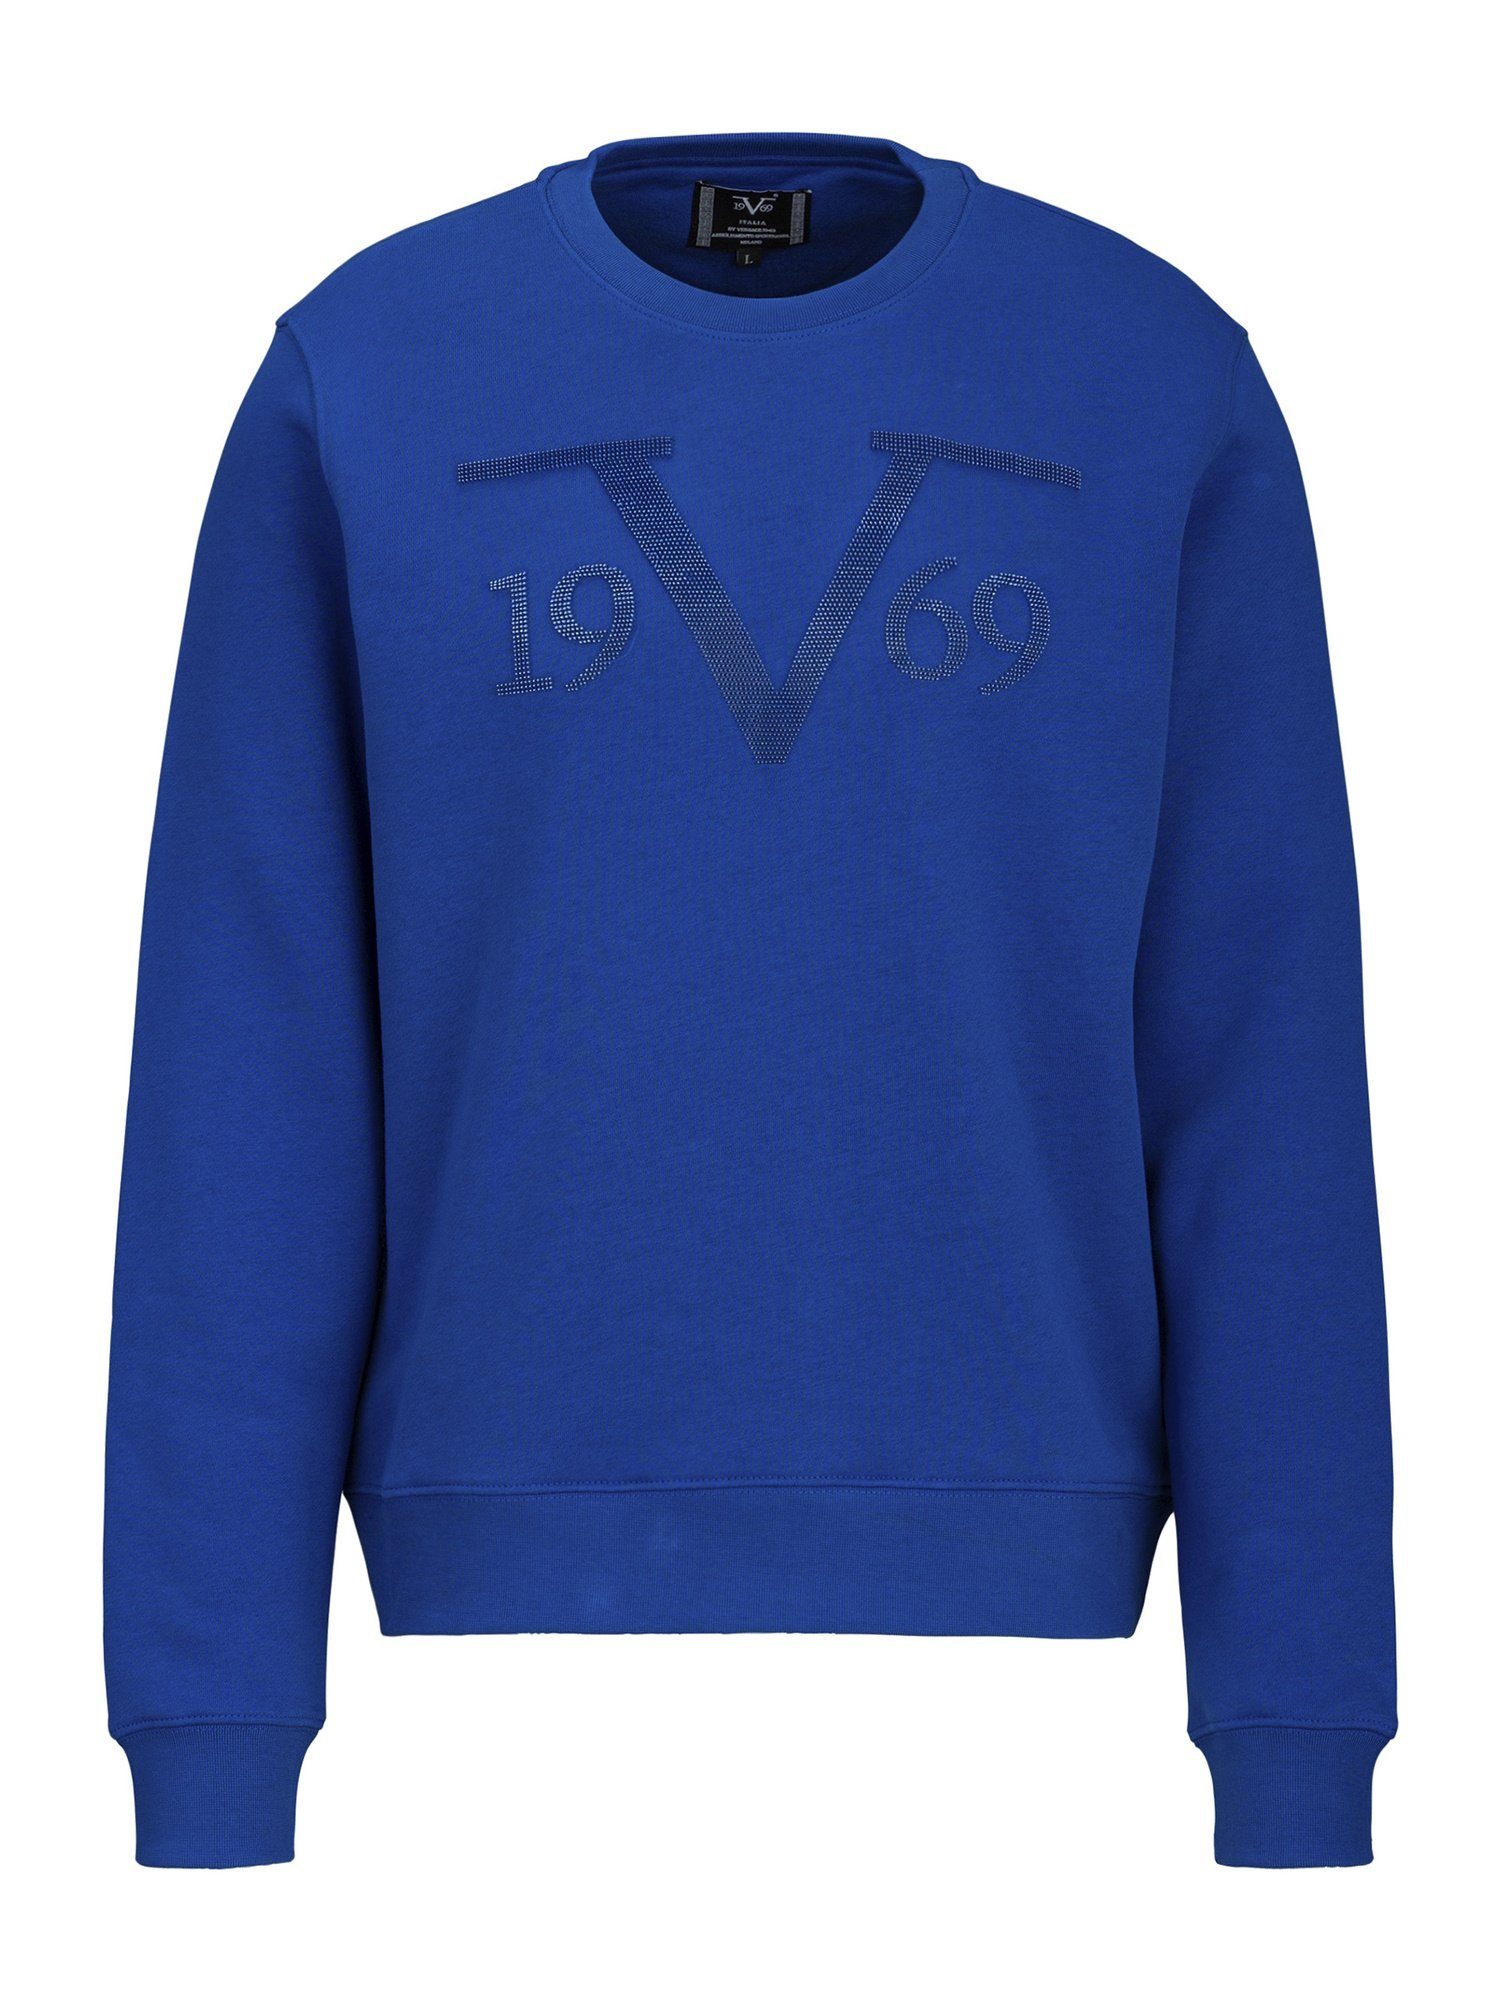 Sweatshirt by Italia BILLY Pullover Sweatshirt Versace 19V69